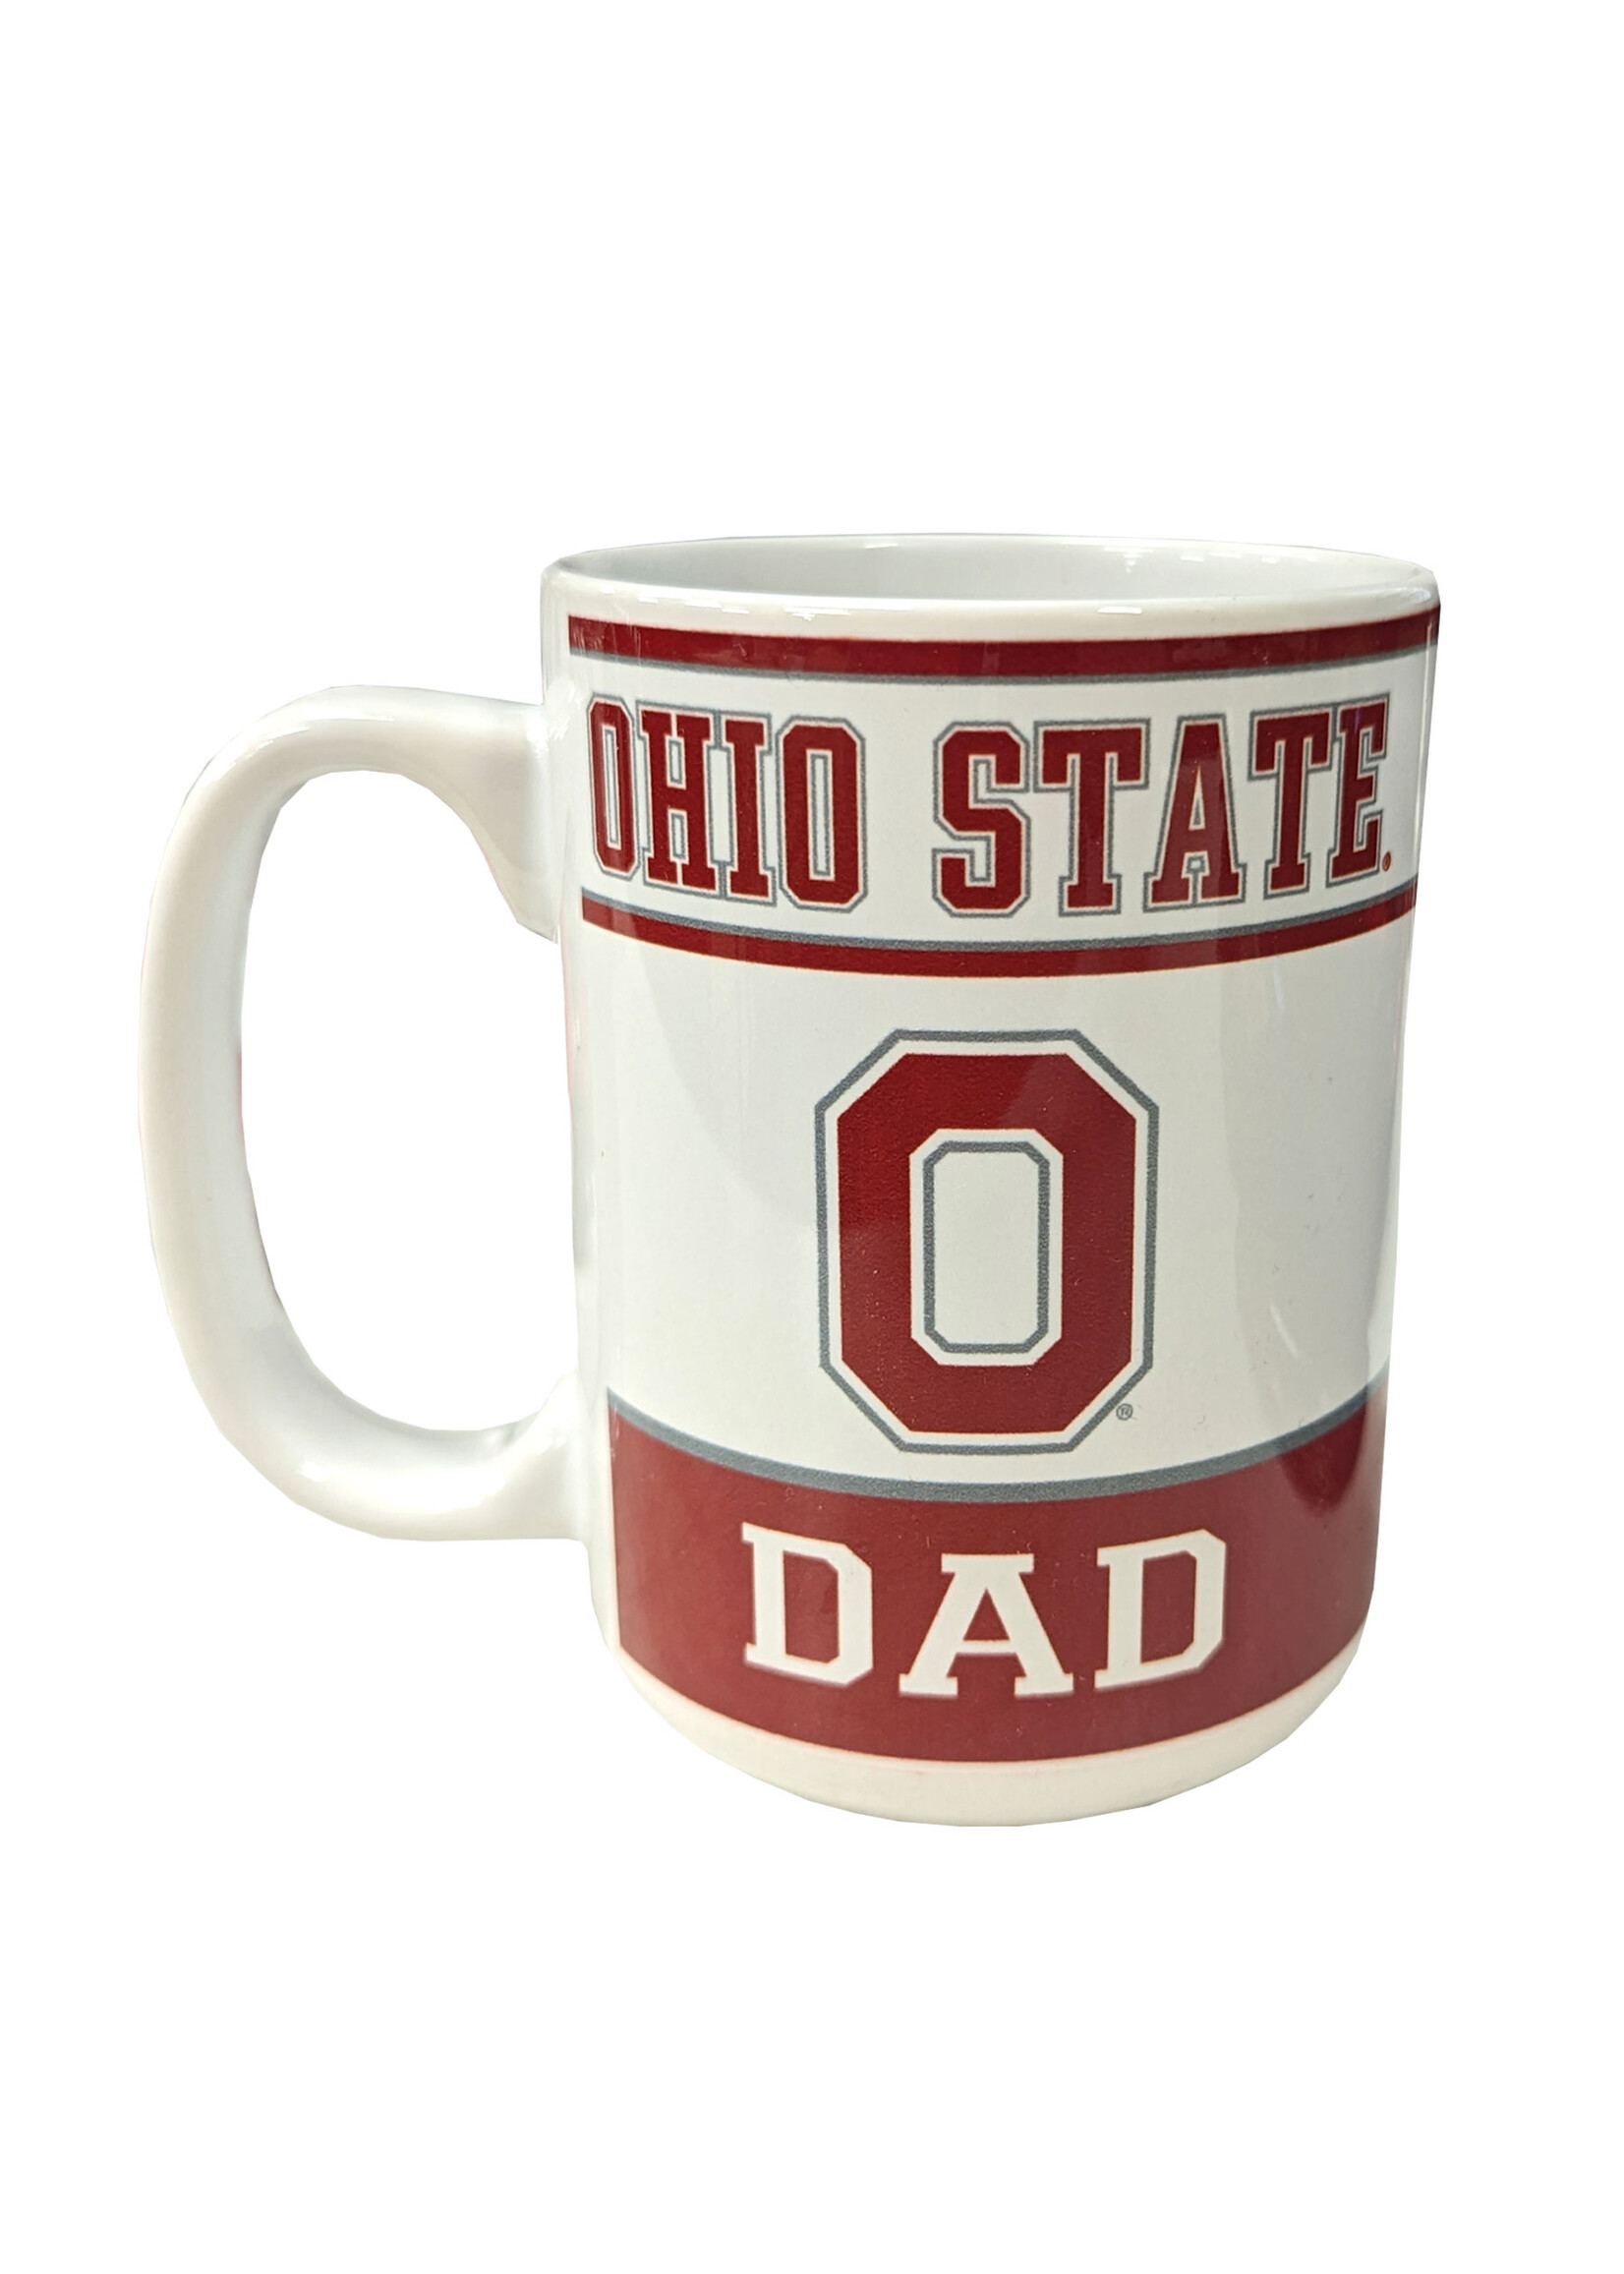 Ohio State Buckeyes 15oz. Dad Mug